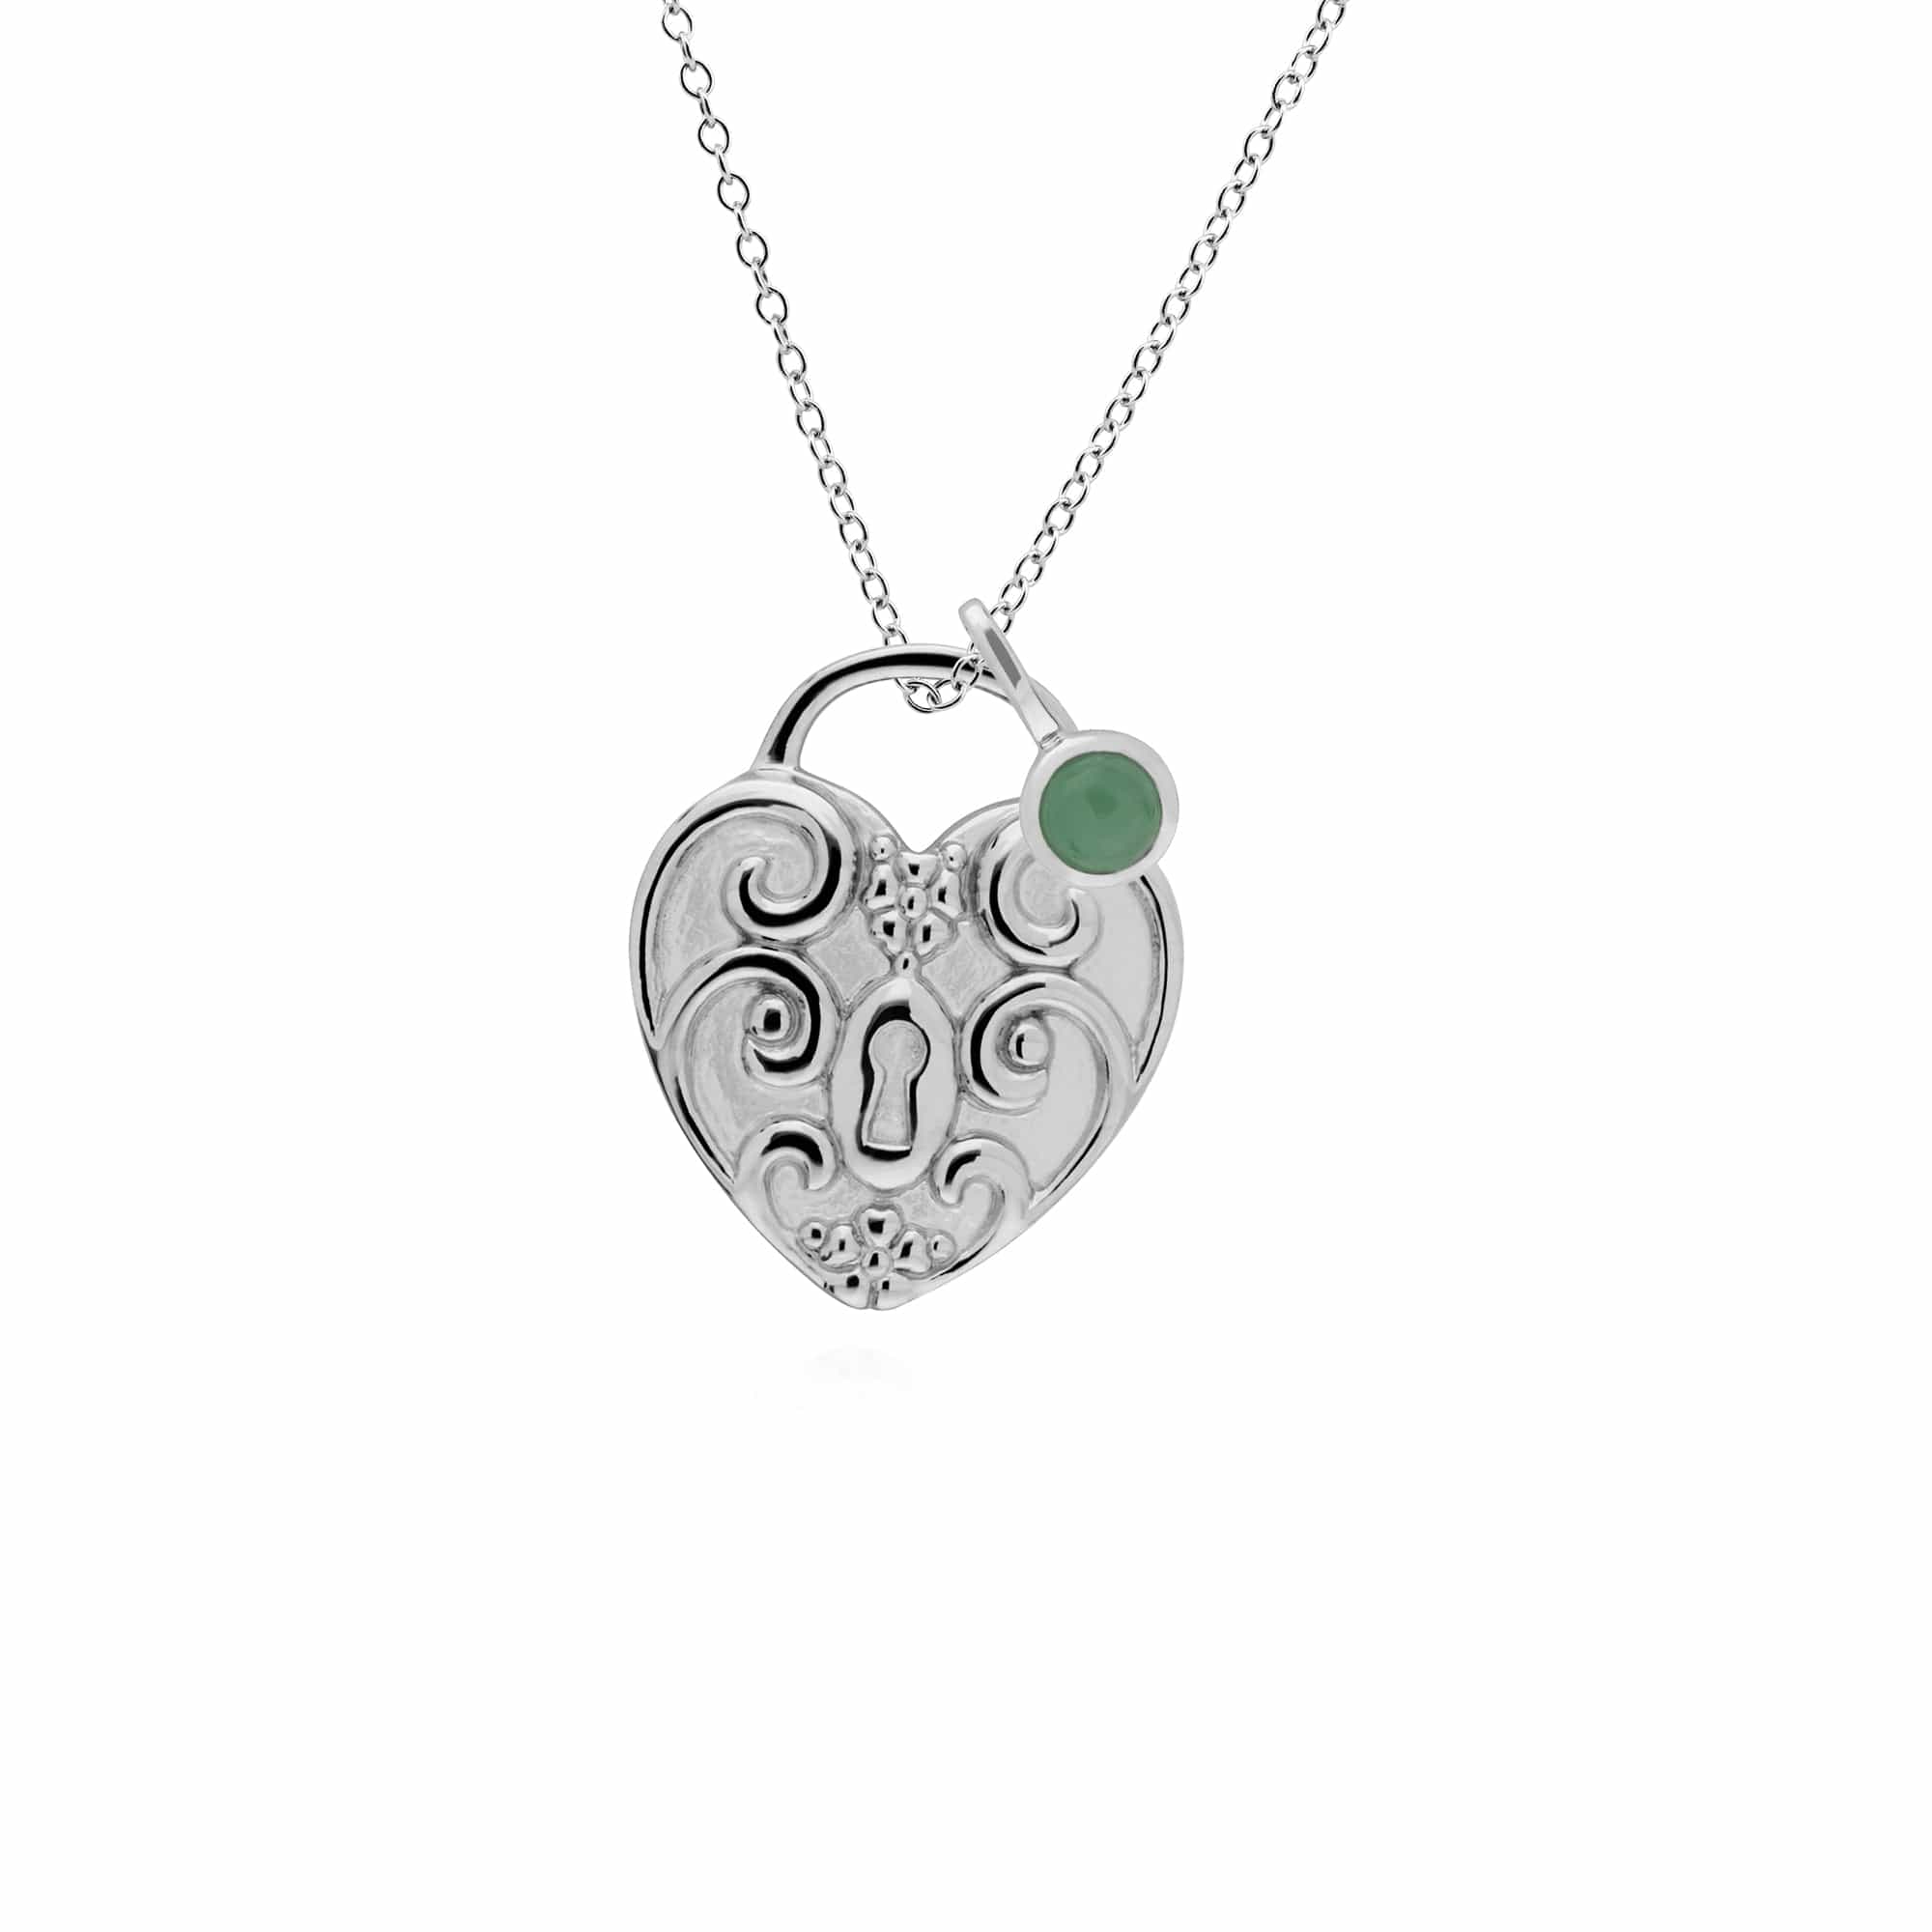 270P028403925-270P026601925 Classic Swirl Heart Lock Pendant & Jade Charm in 925 Sterling Silver 1